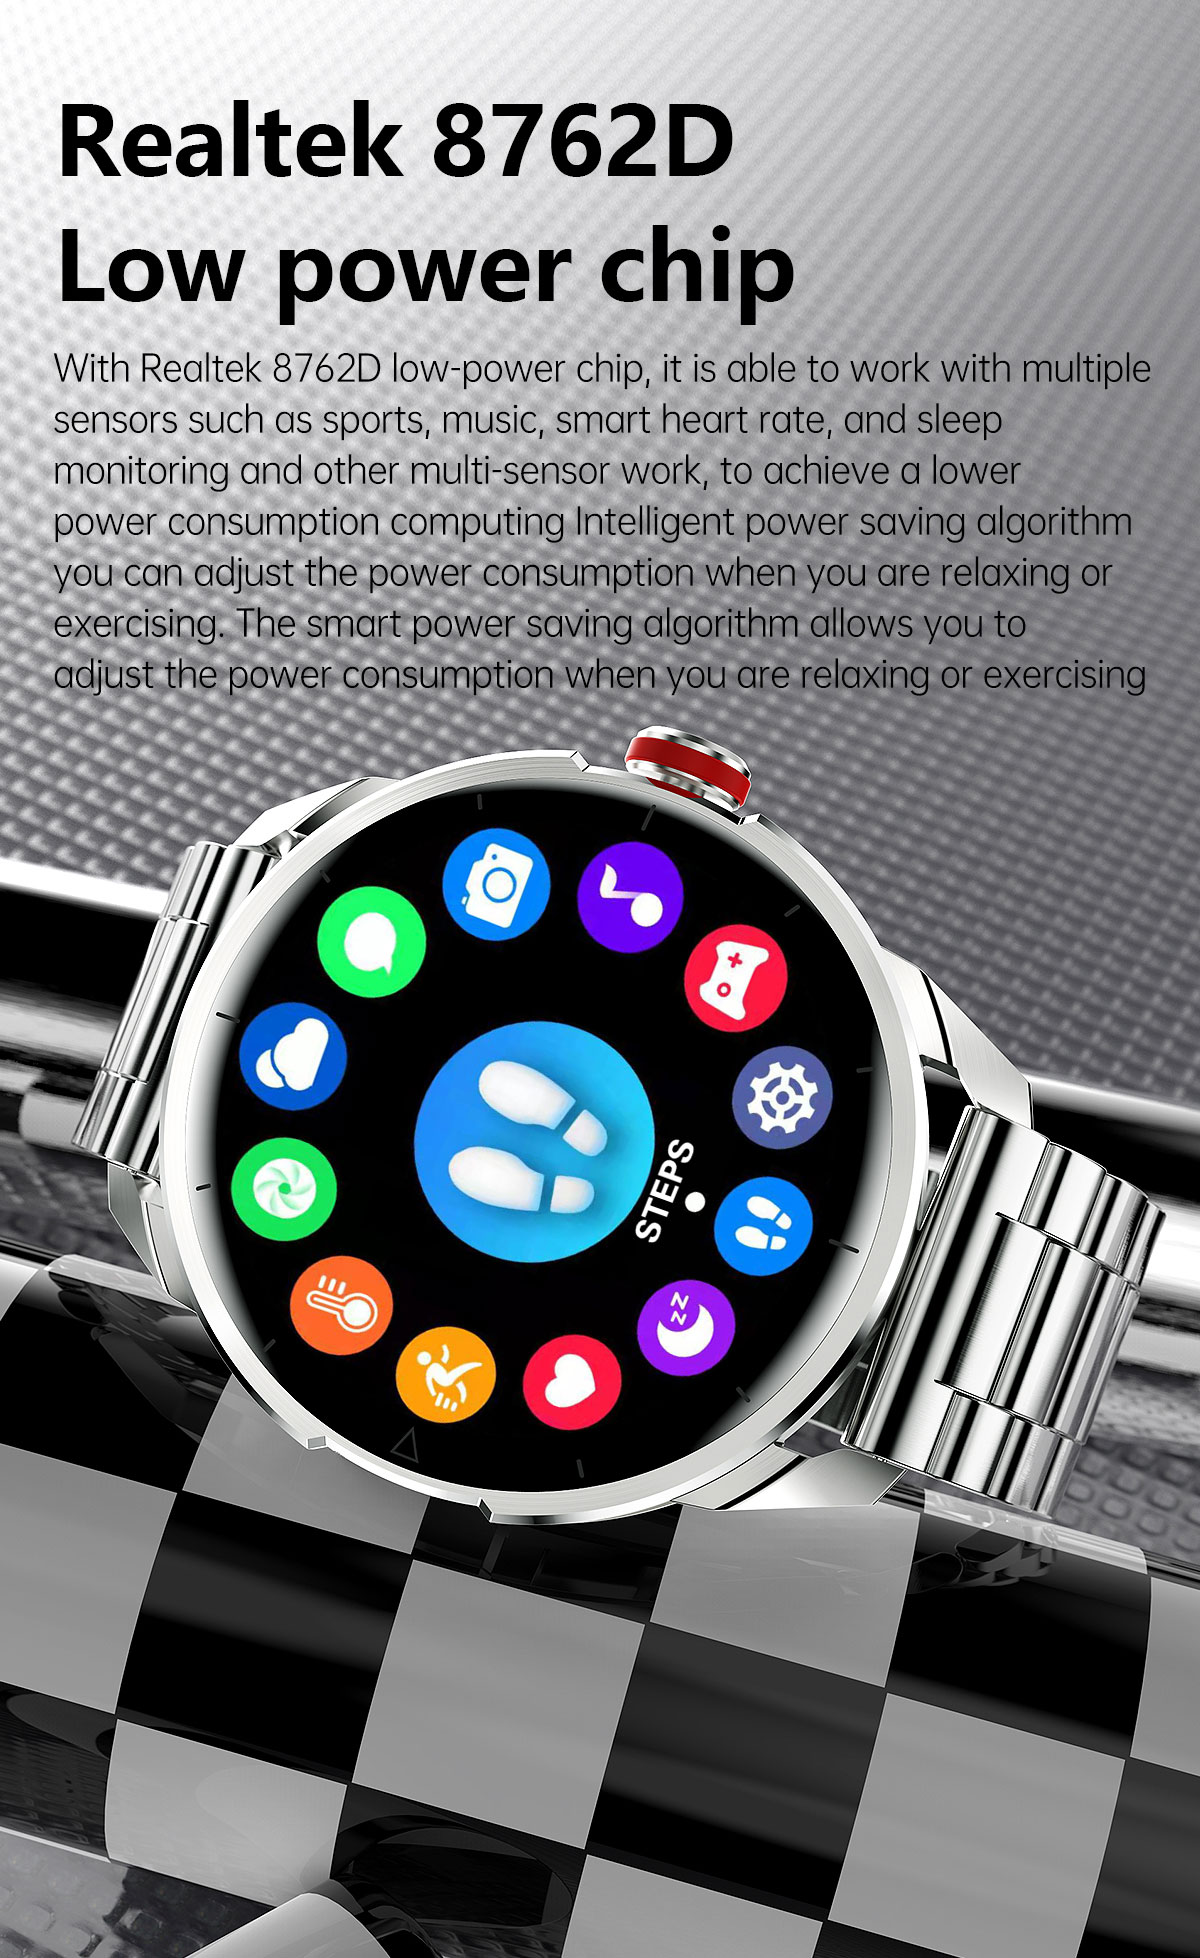 lemfo lf26 pro smart watch (1)